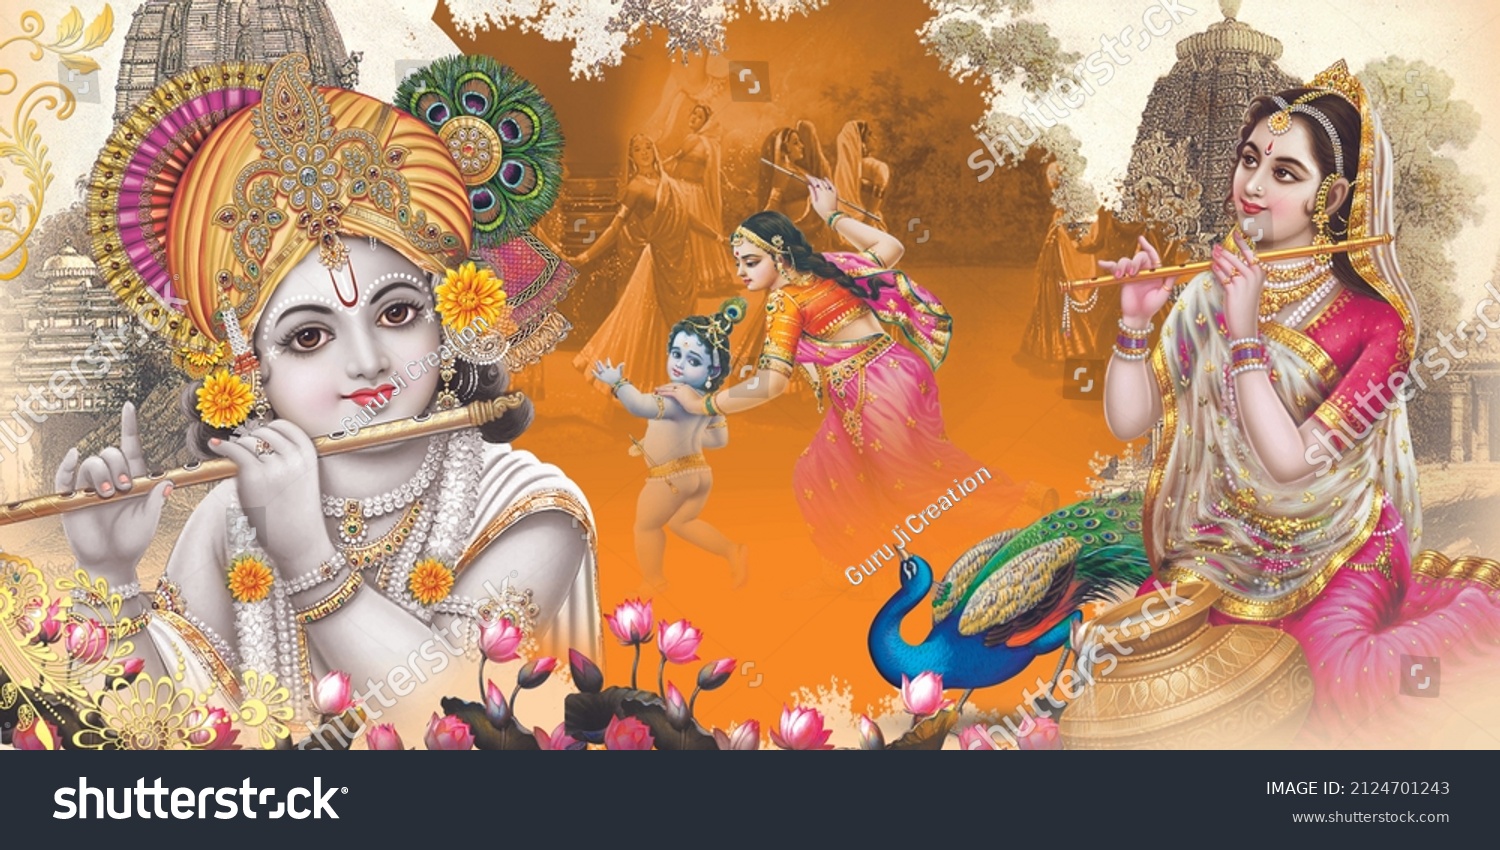 Lord Krishna Wall Poster Lord Radha Stock Illustration 2124701243 Shutterstock 